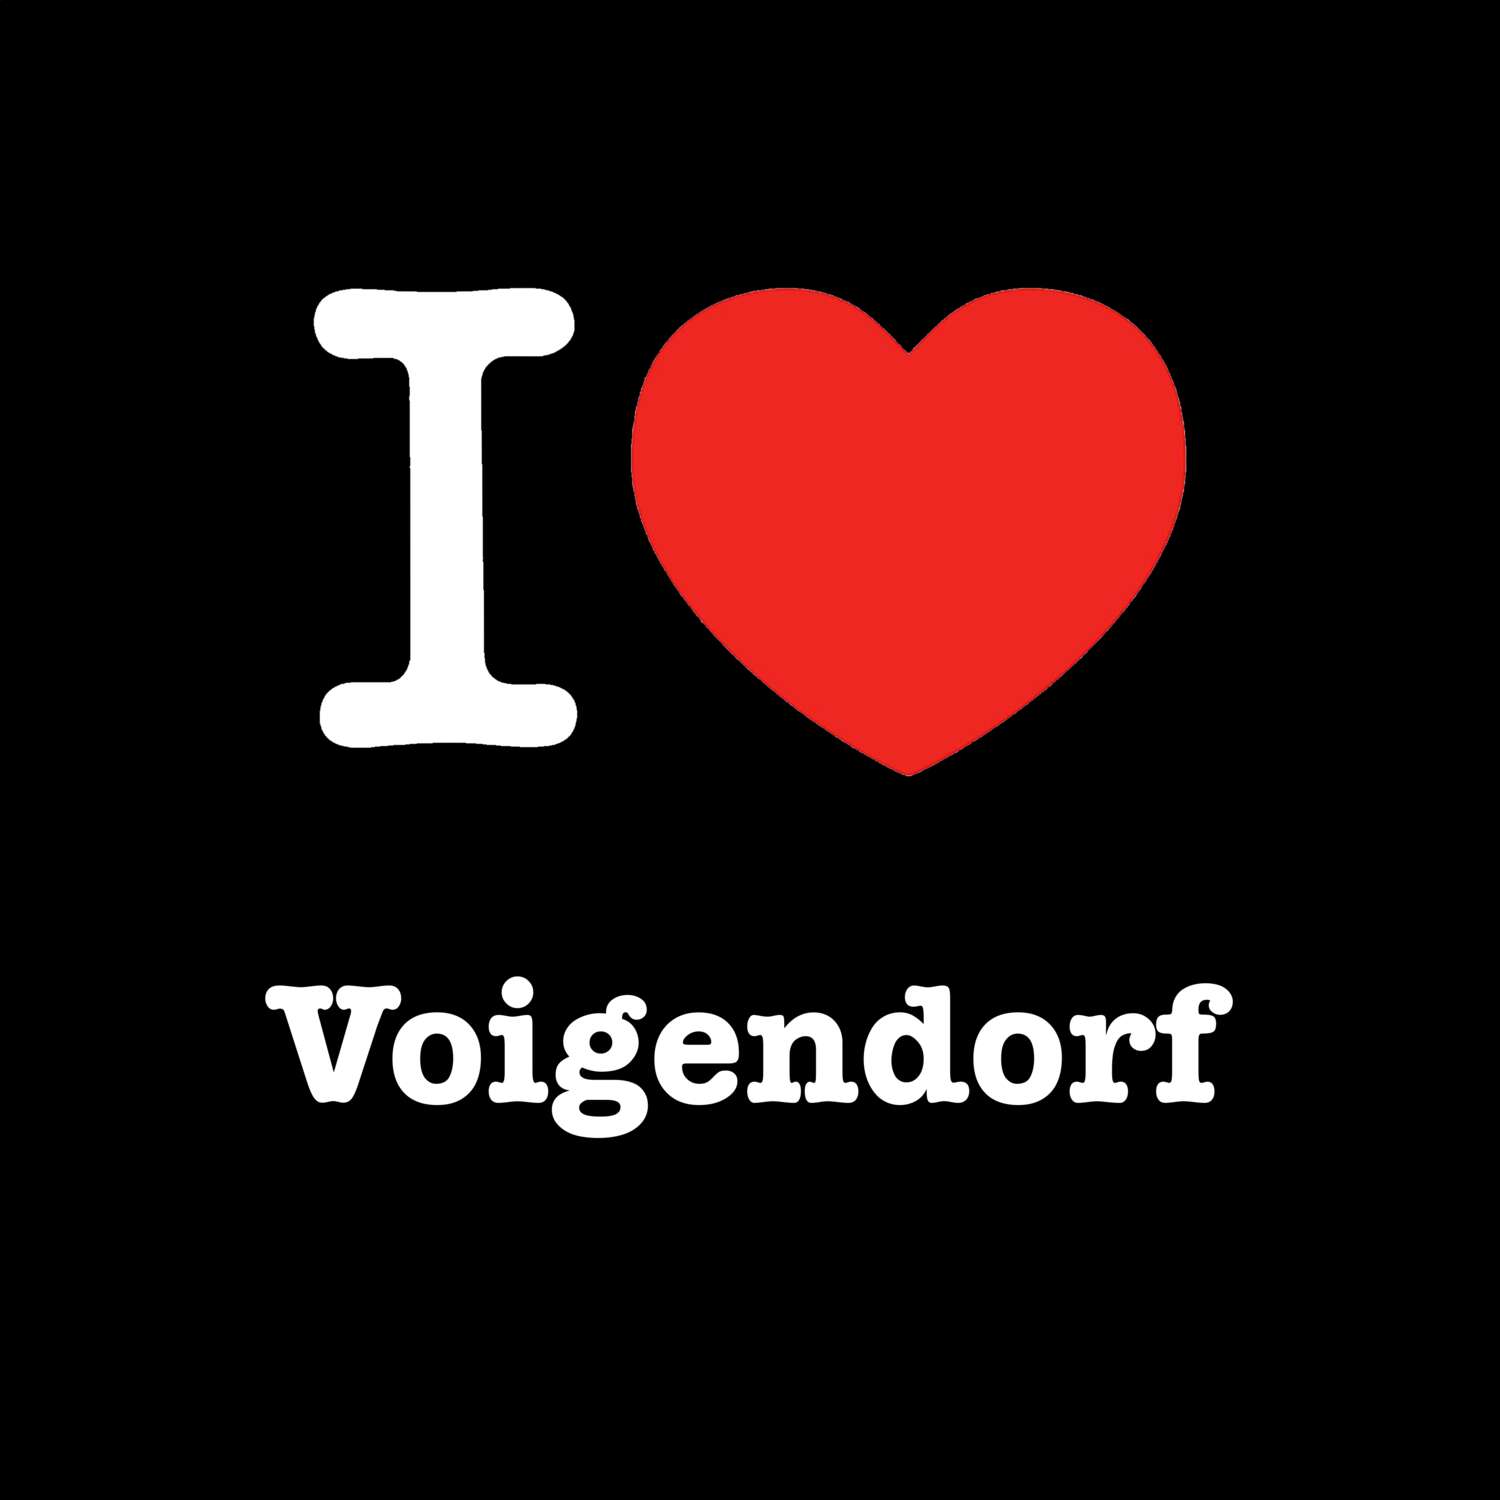 Voigendorf T-Shirt »I love«